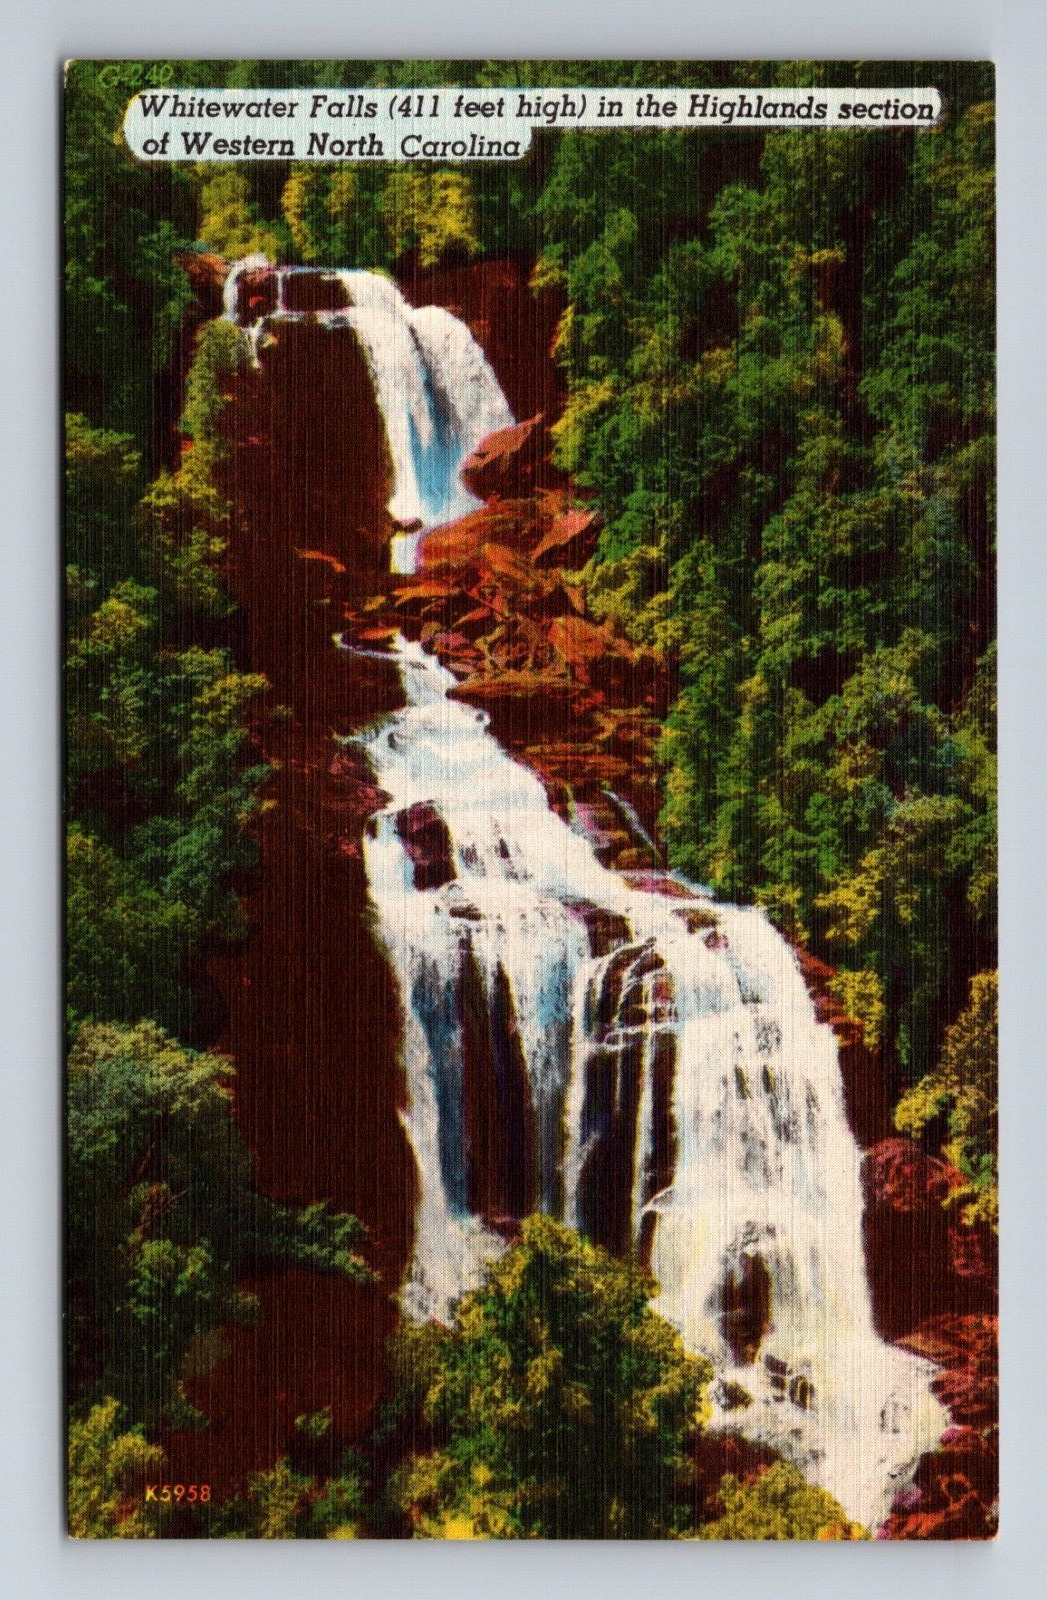 Whitewater Falls Pisgah National Forest Highlands North Carolina Postcard